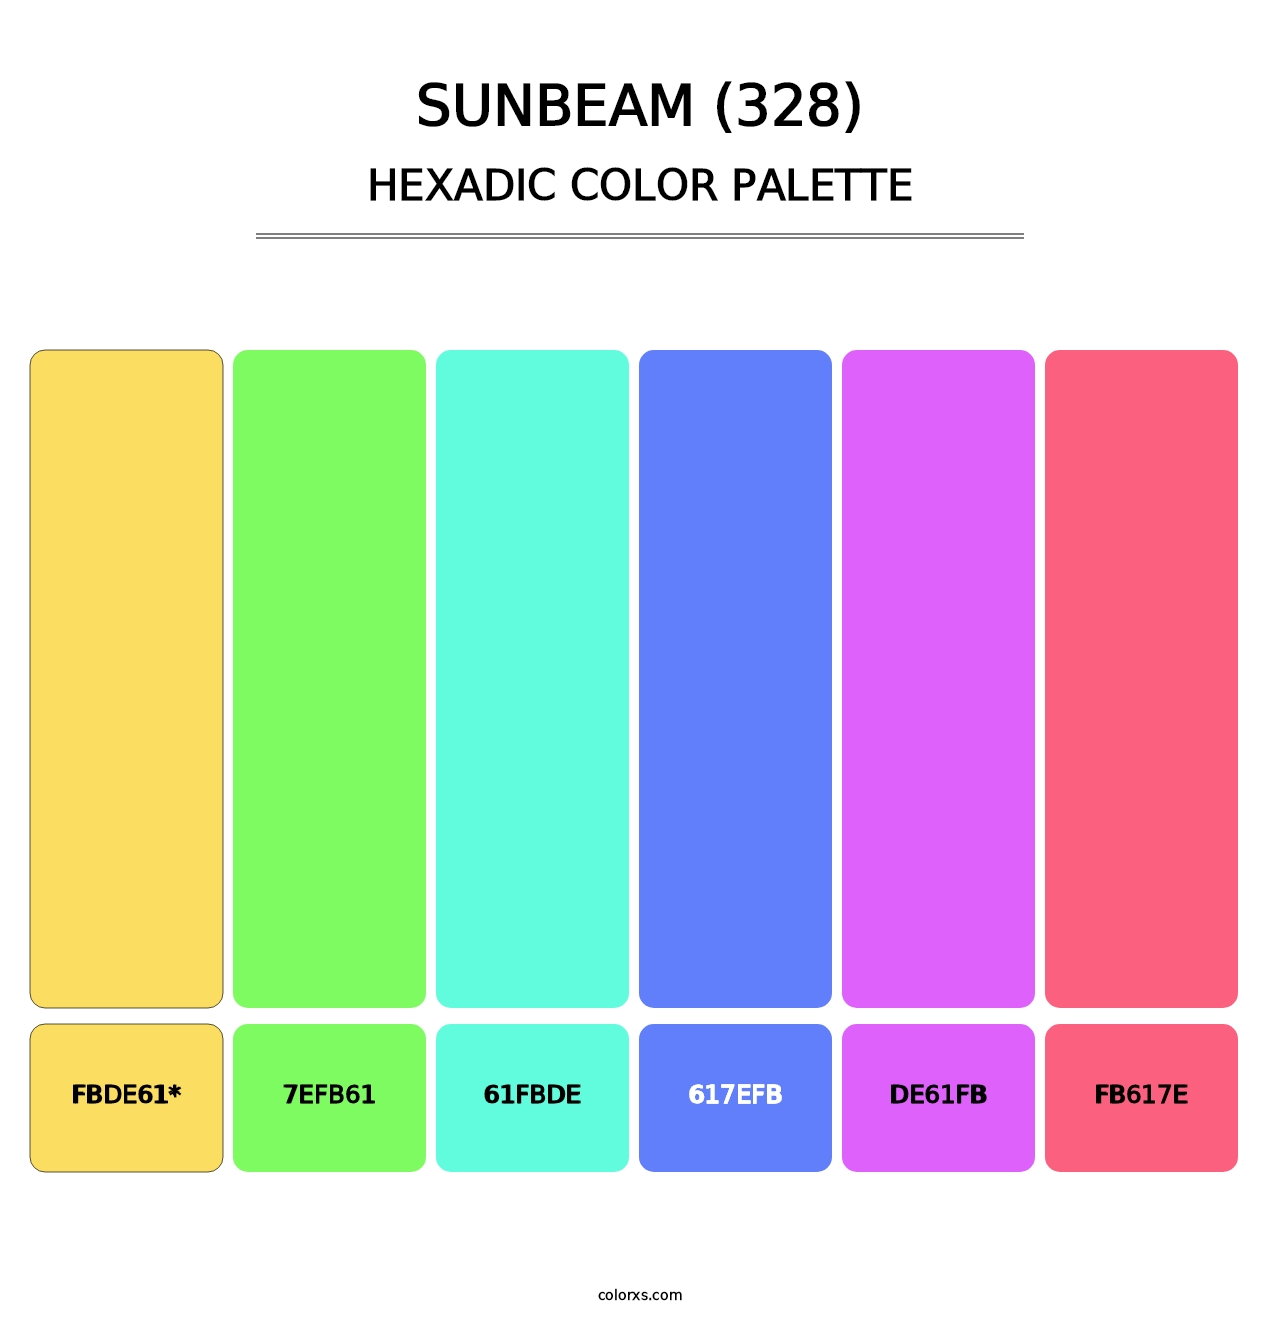 Sunbeam (328) - Hexadic Color Palette